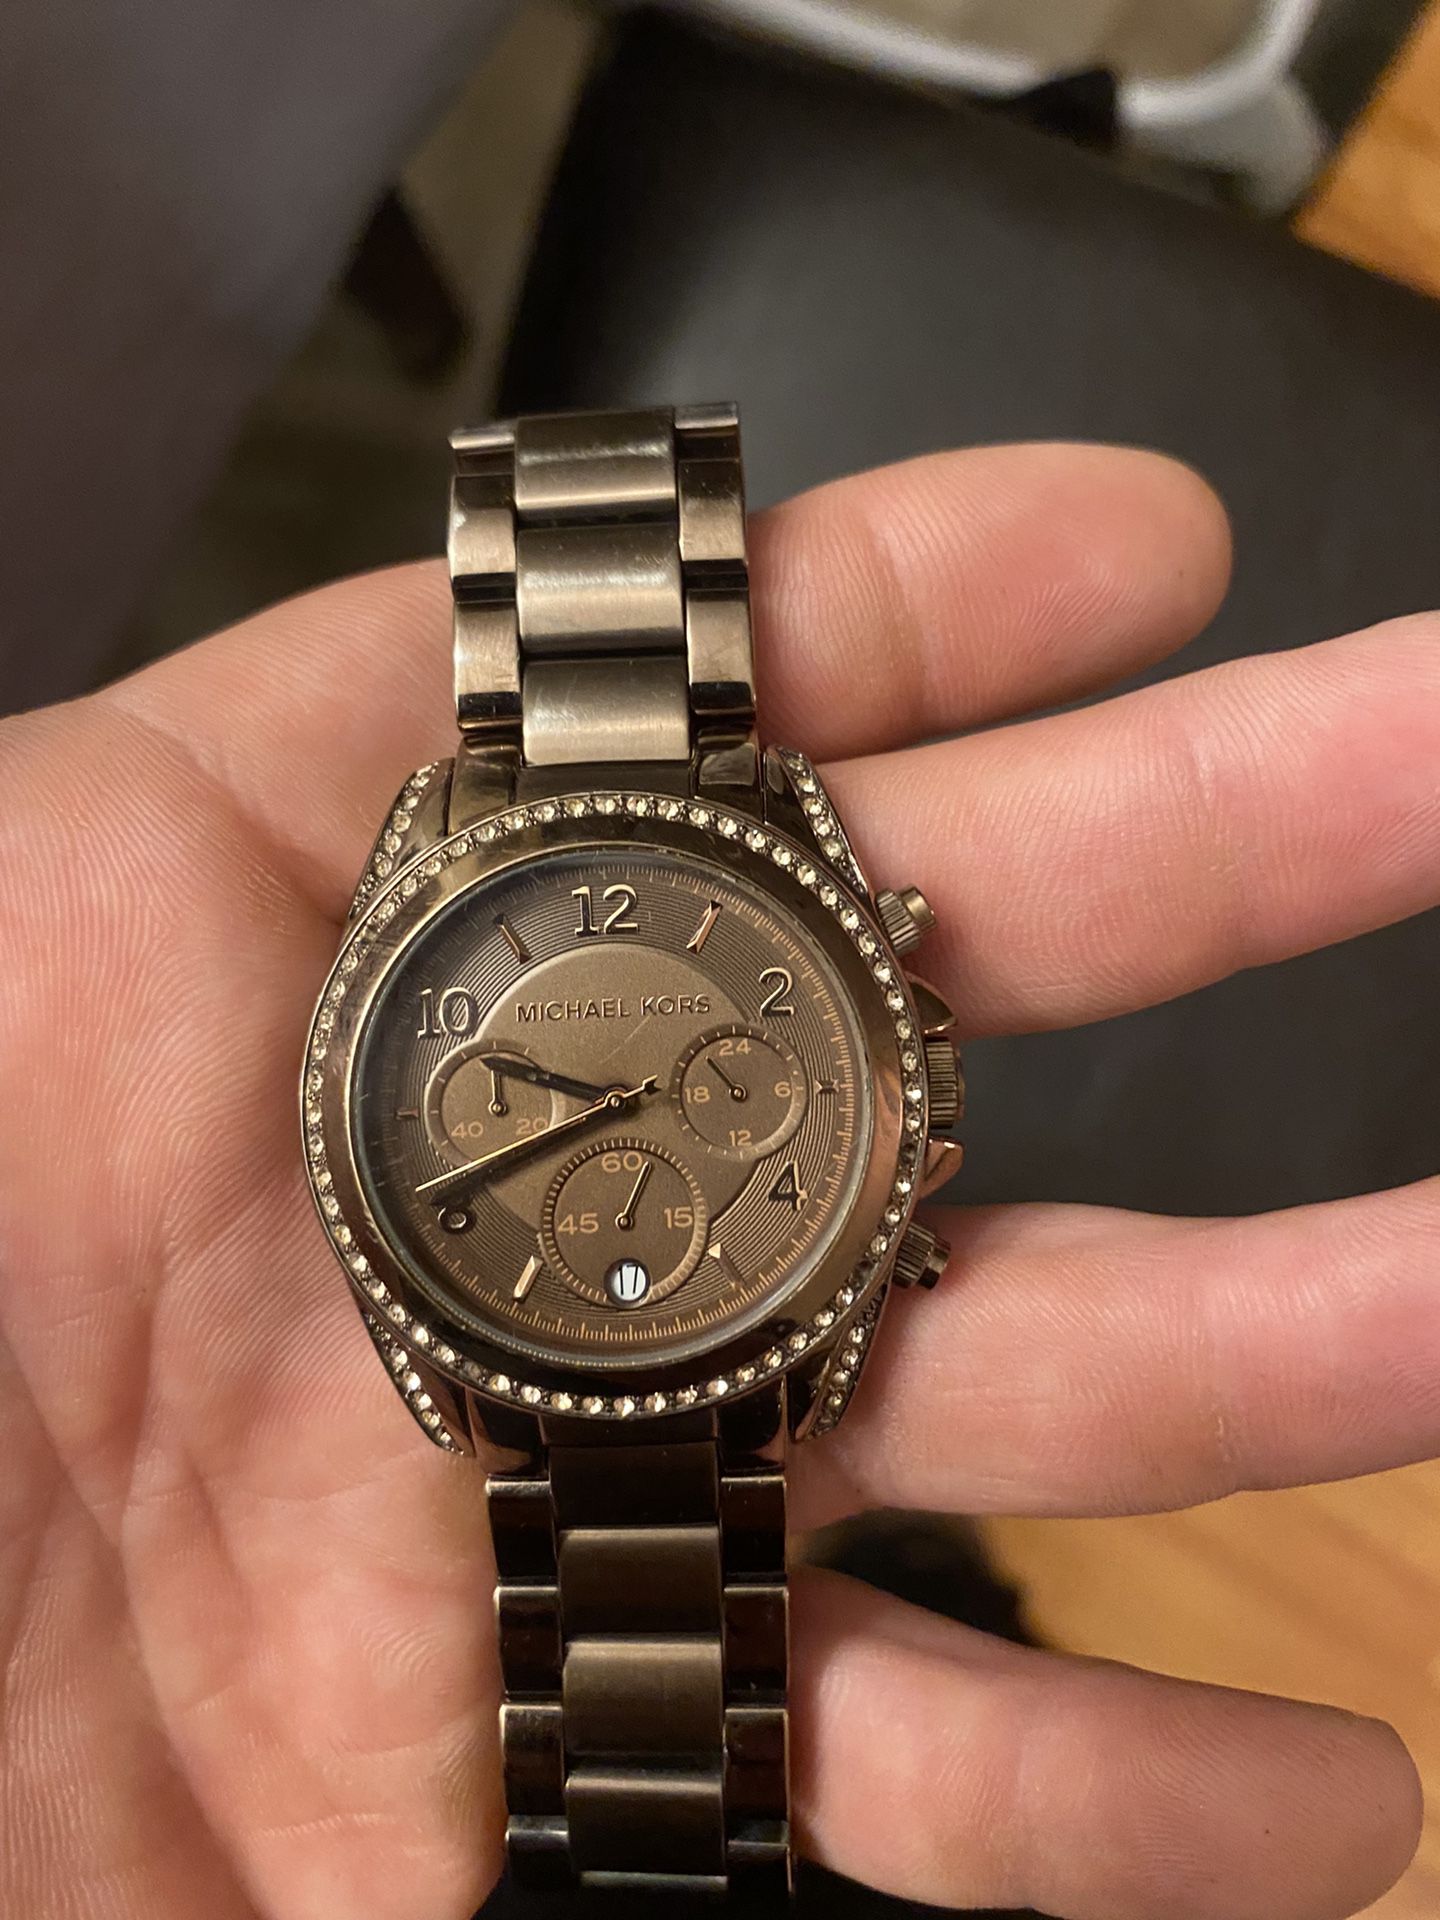 Michael Kors MK 5493 Womens Chronograph Watch!